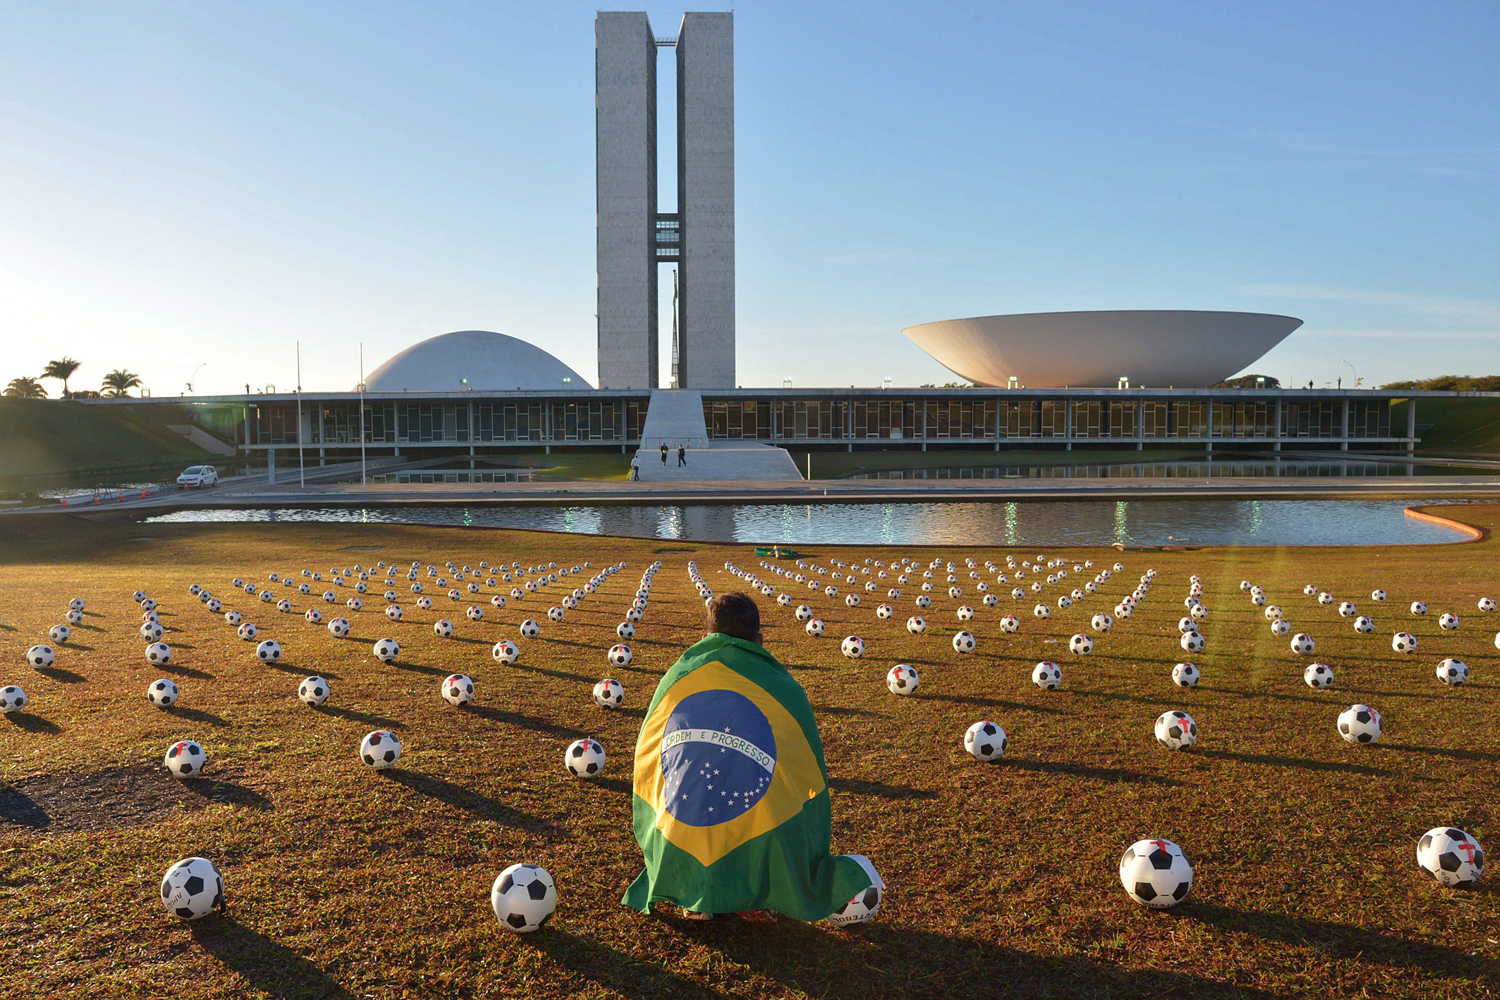 Brazilian organization sowed hundred of soccer balls in protest